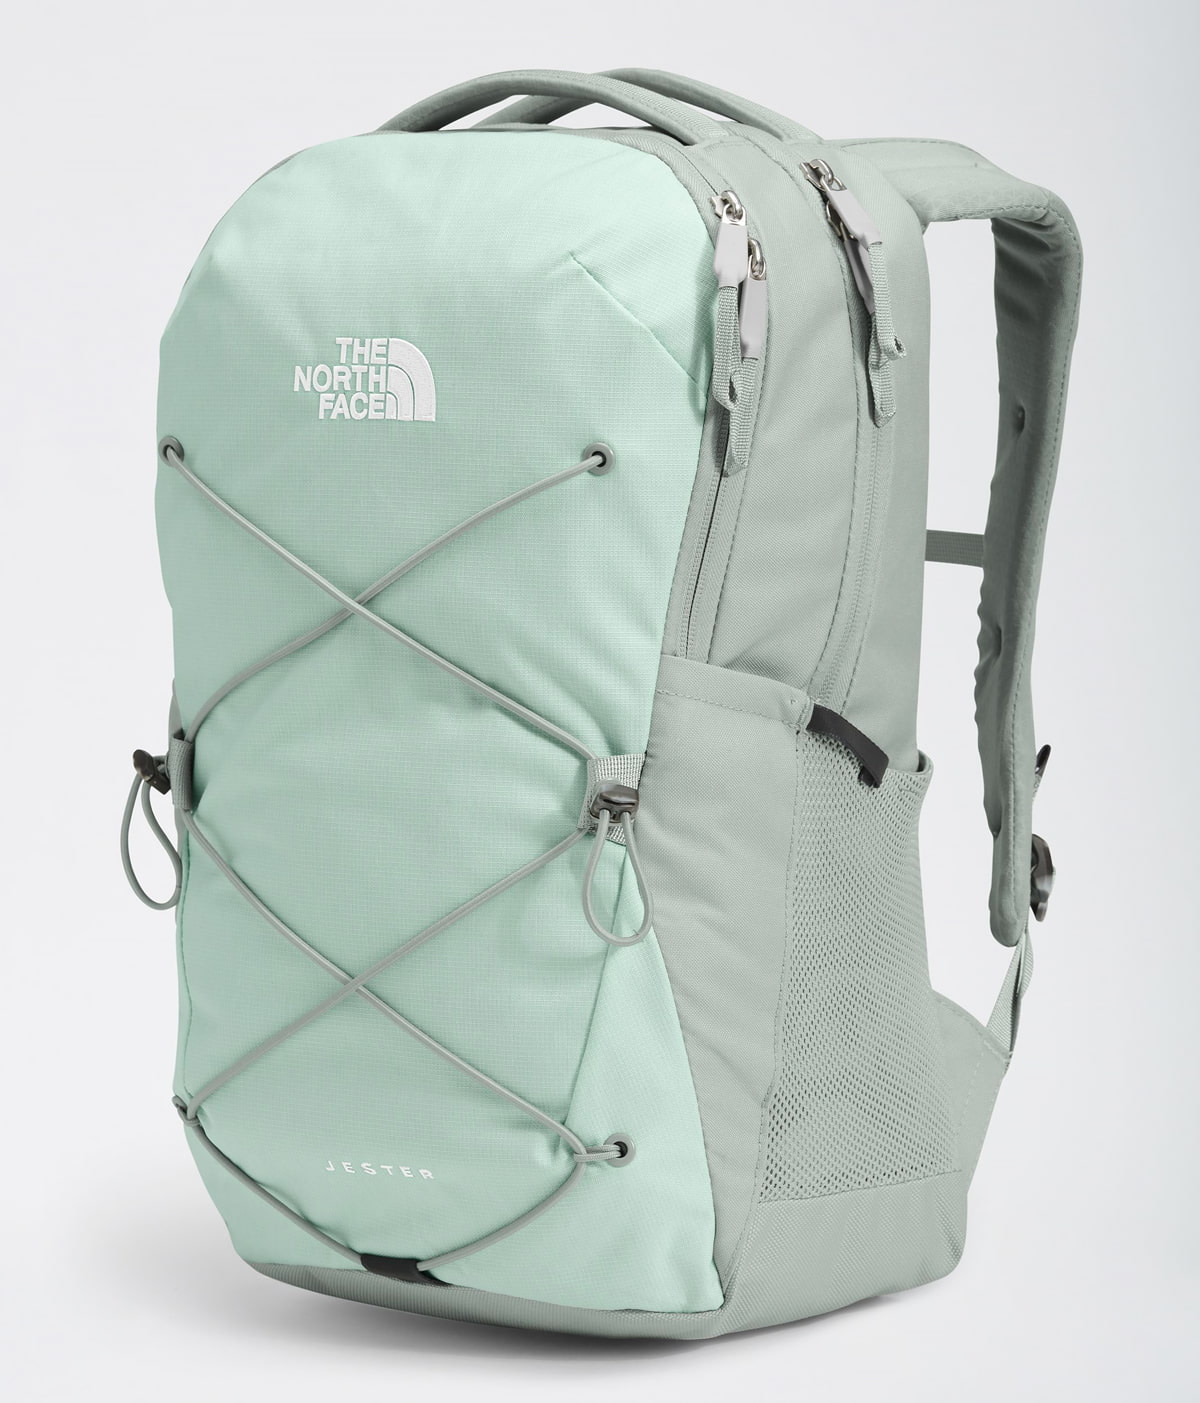 Affordable backpack for women